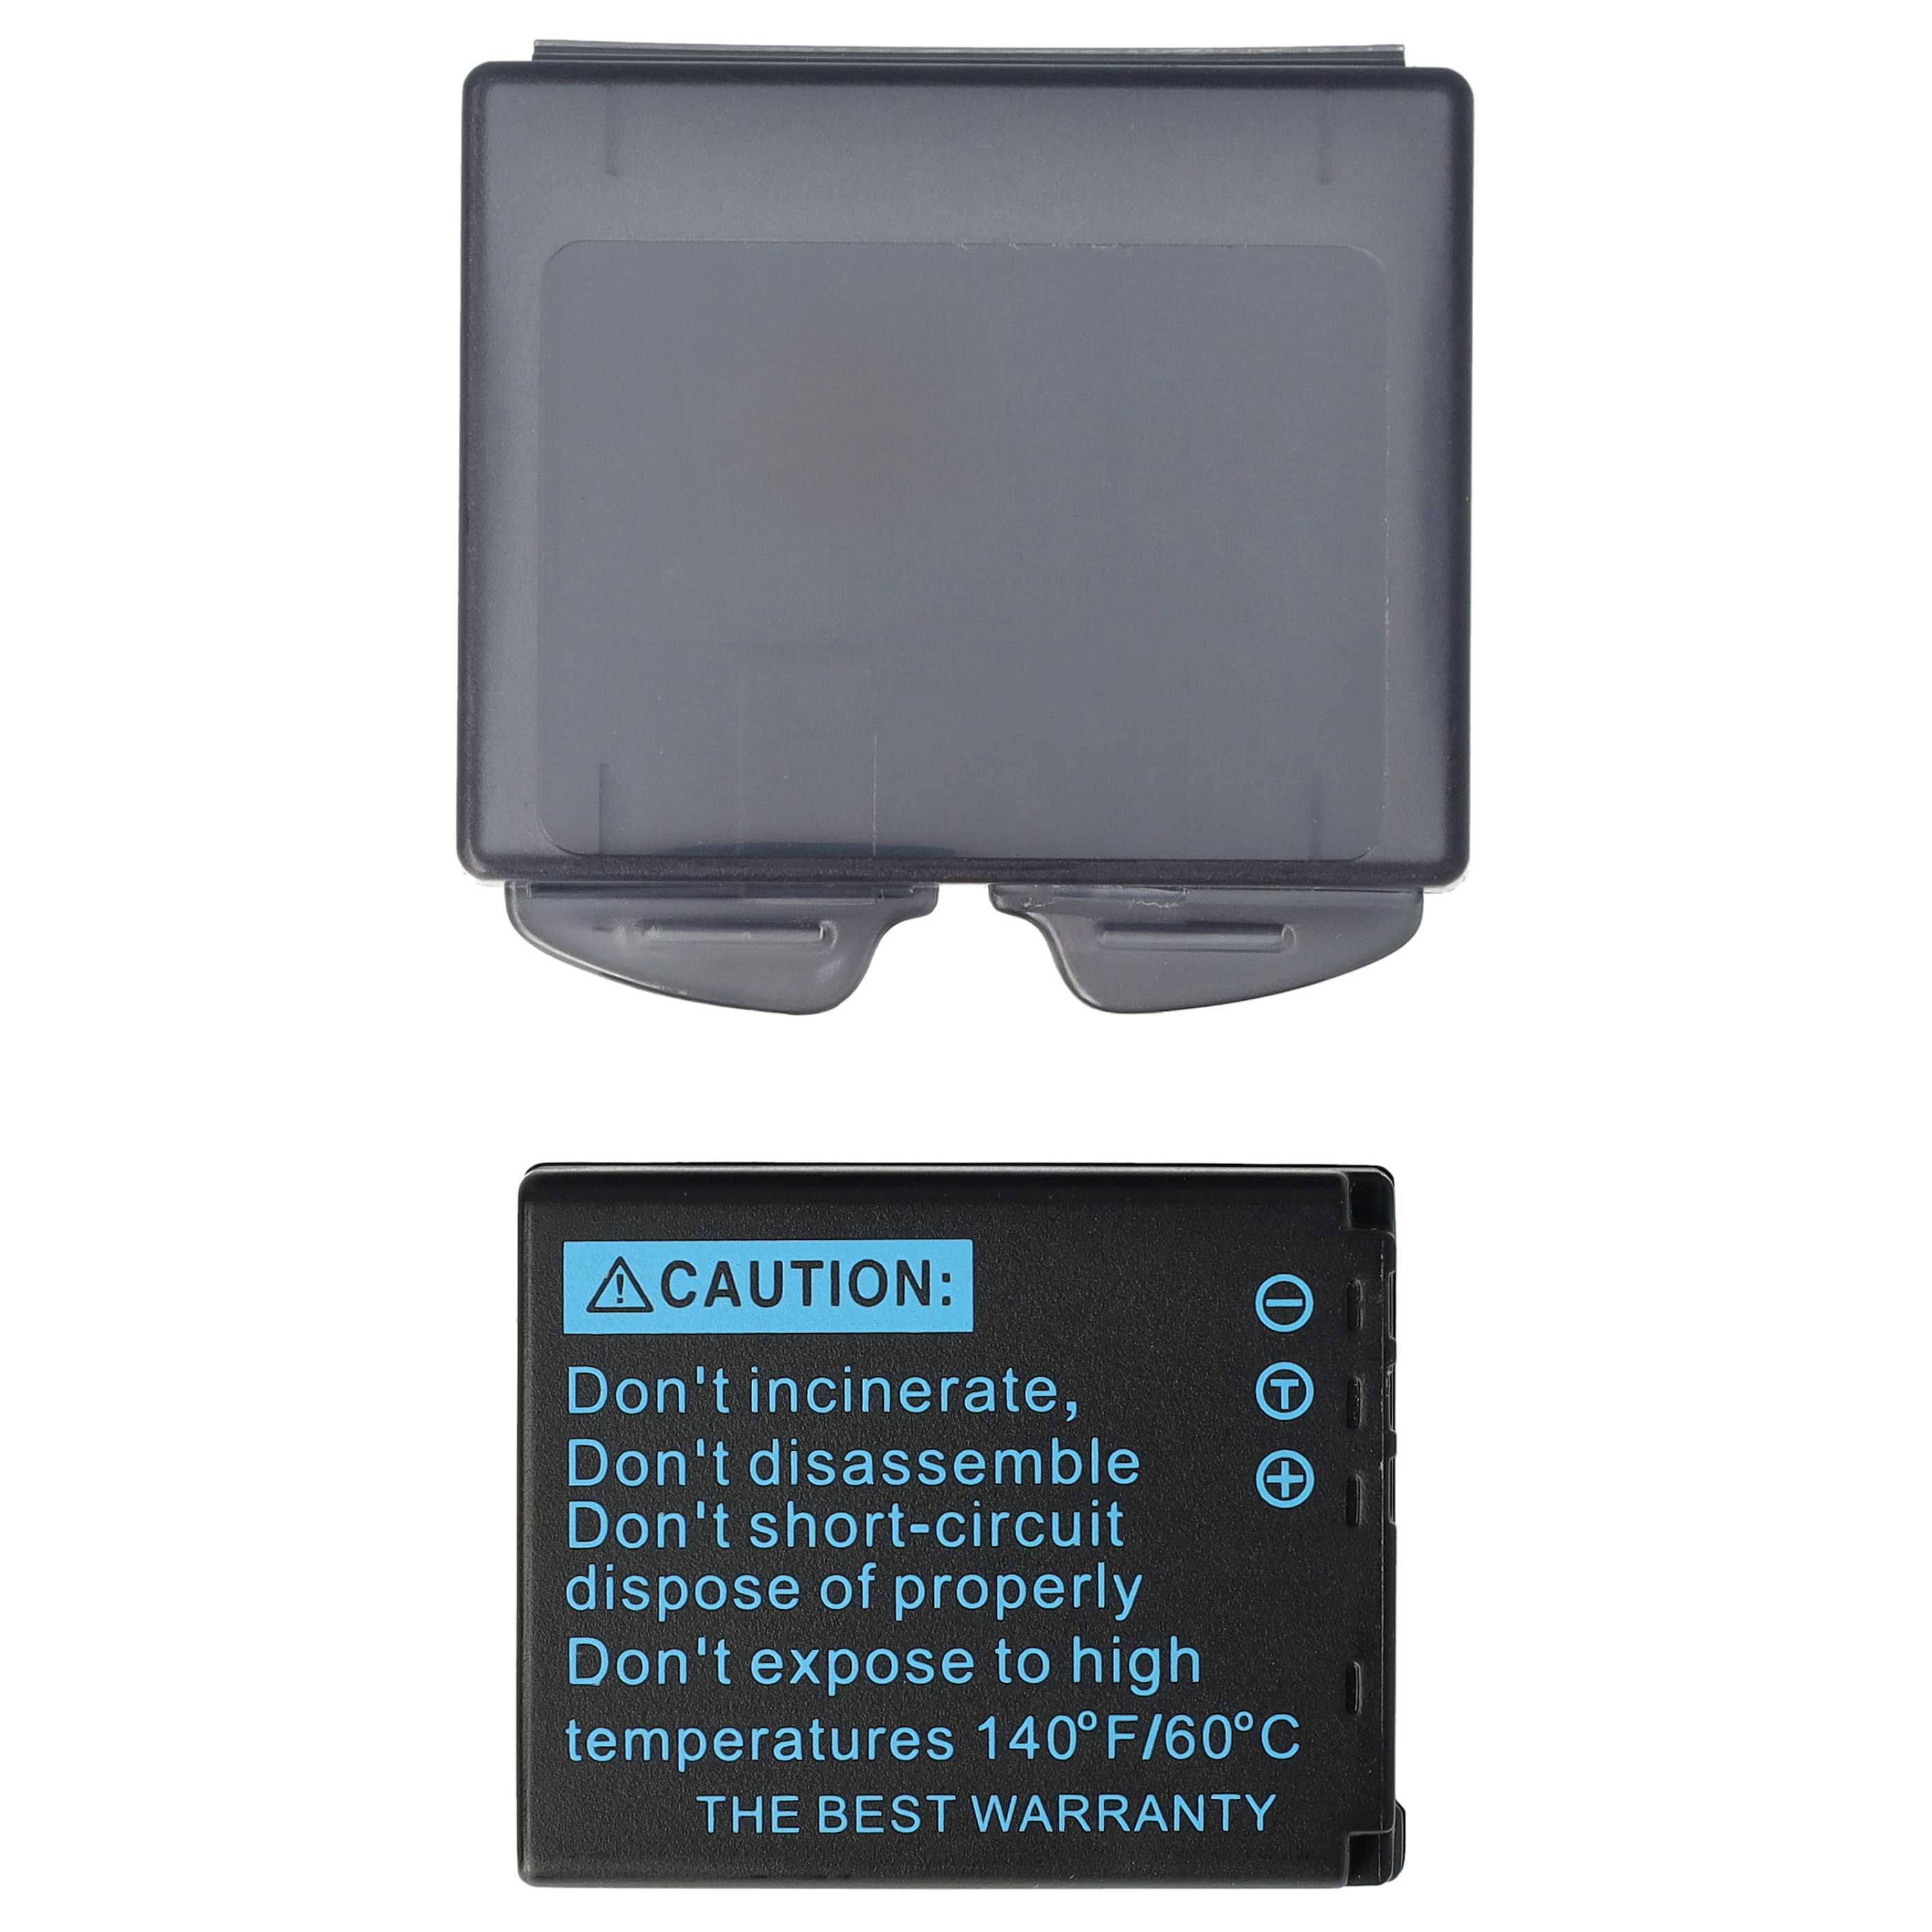 Akumulator do aparatu cyfrowego zamiennik Panasonic CGA-S007A/B, CGA-S007, CGA-S007A/1B - 650 mAh 3,6 V Li-Ion